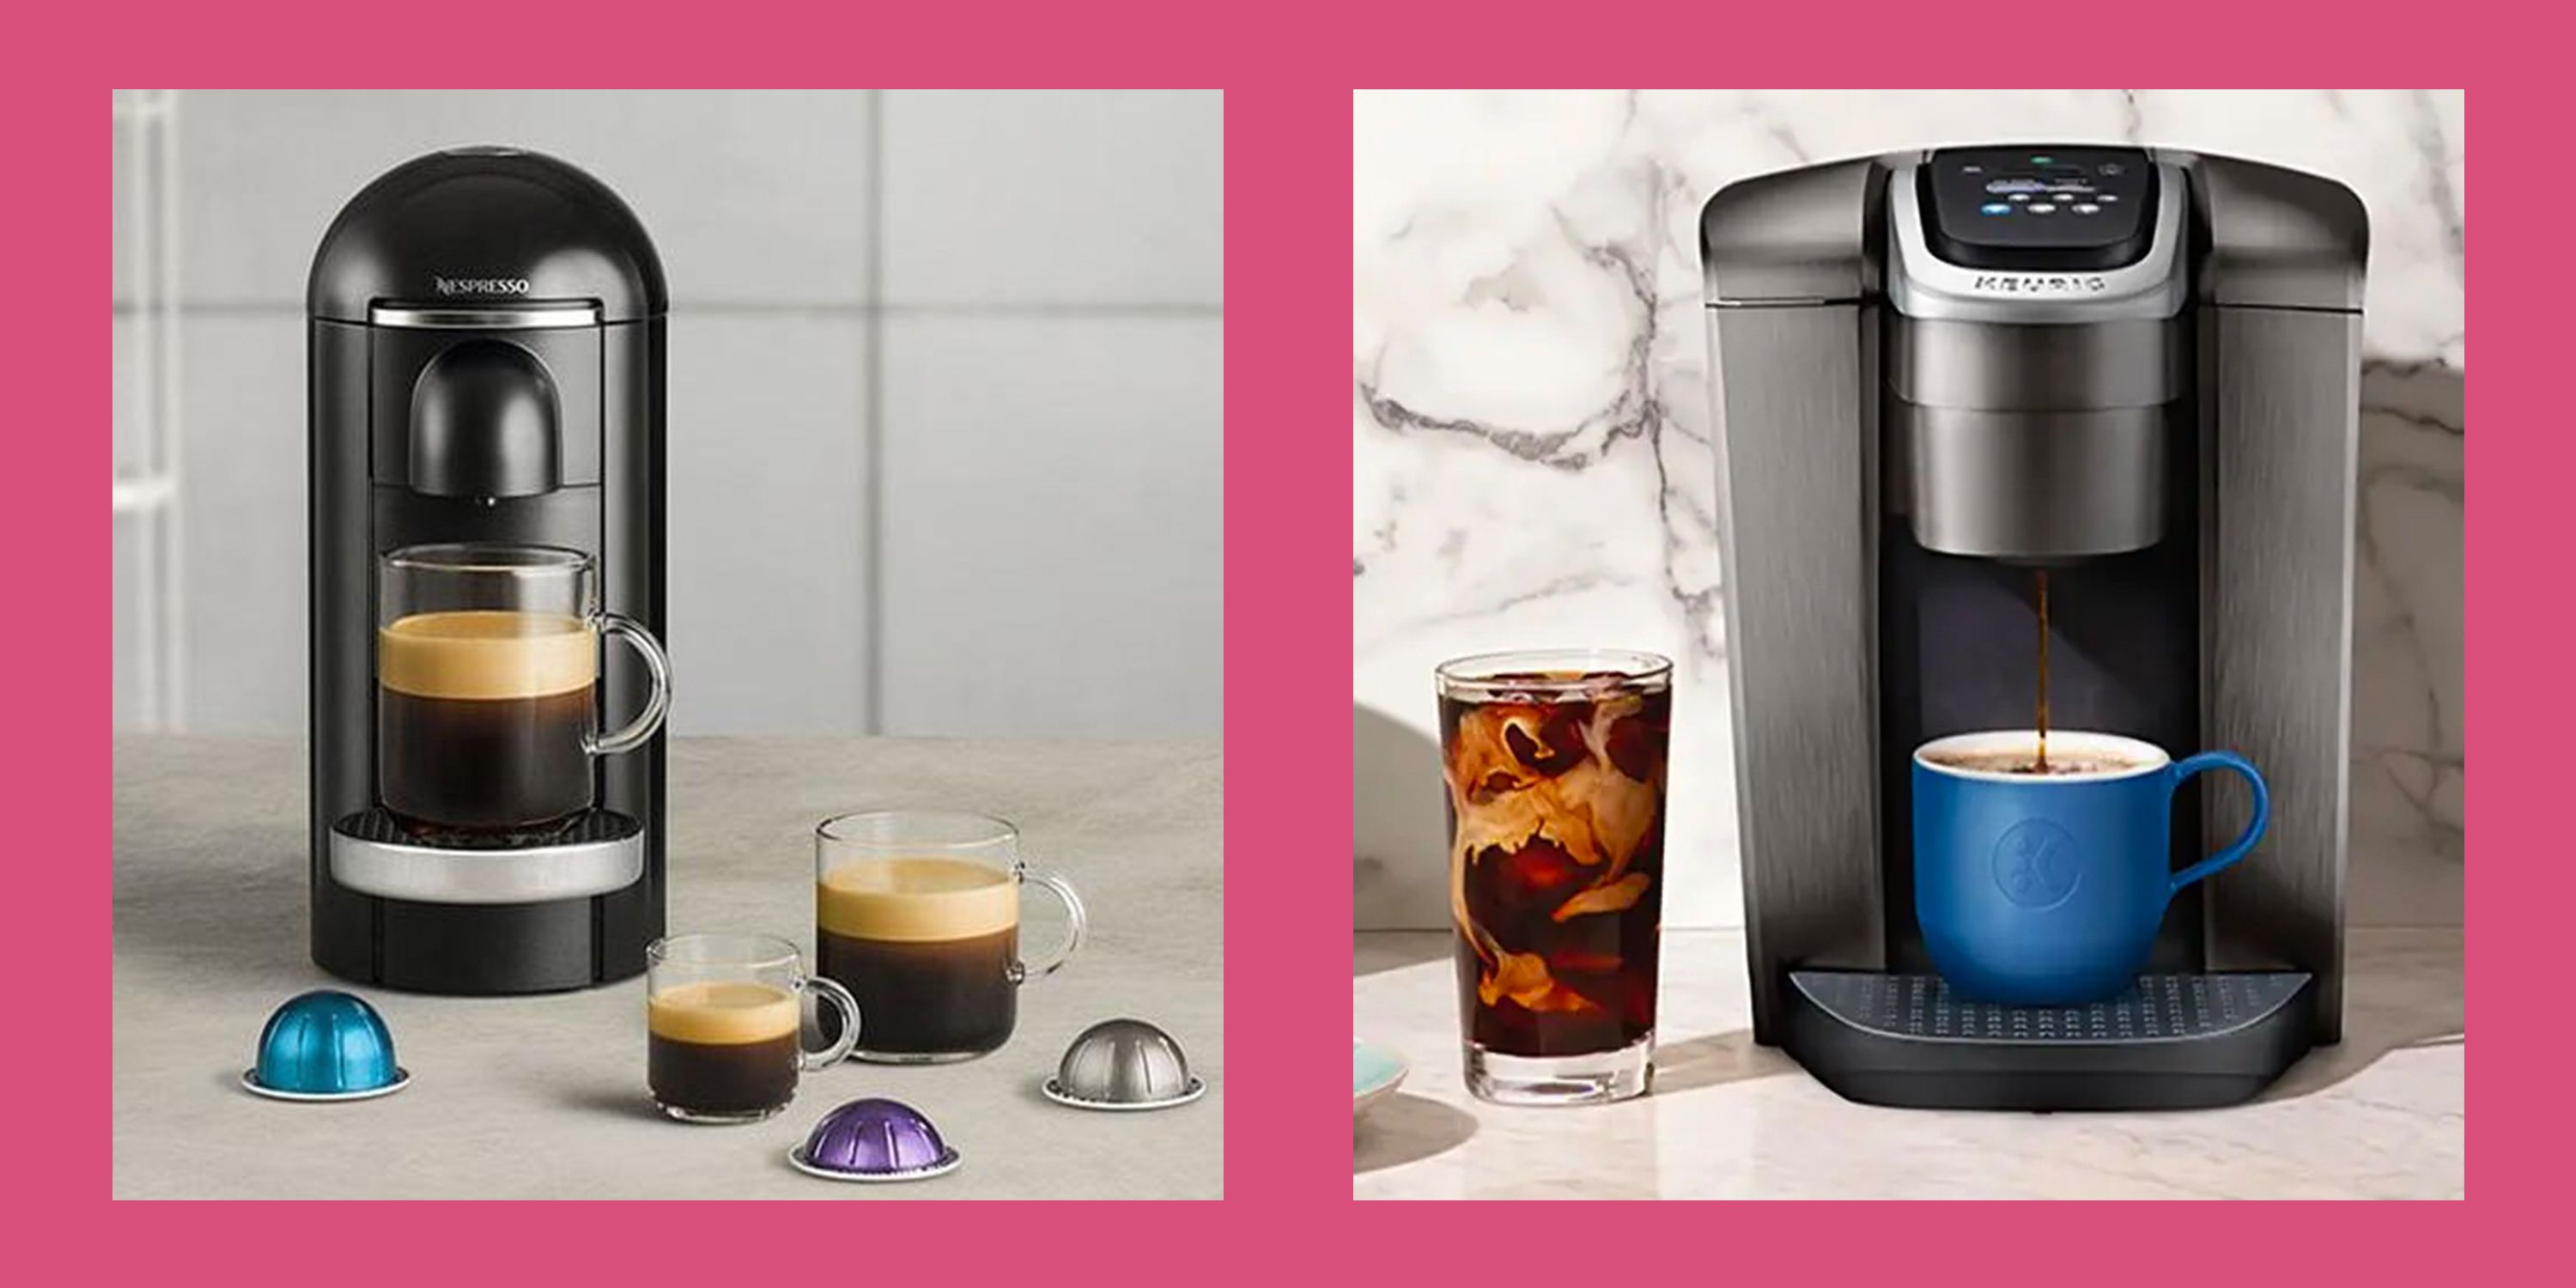 Keurig K-classic Single-serve K-cup Pod Coffee Maker - K50 : Target